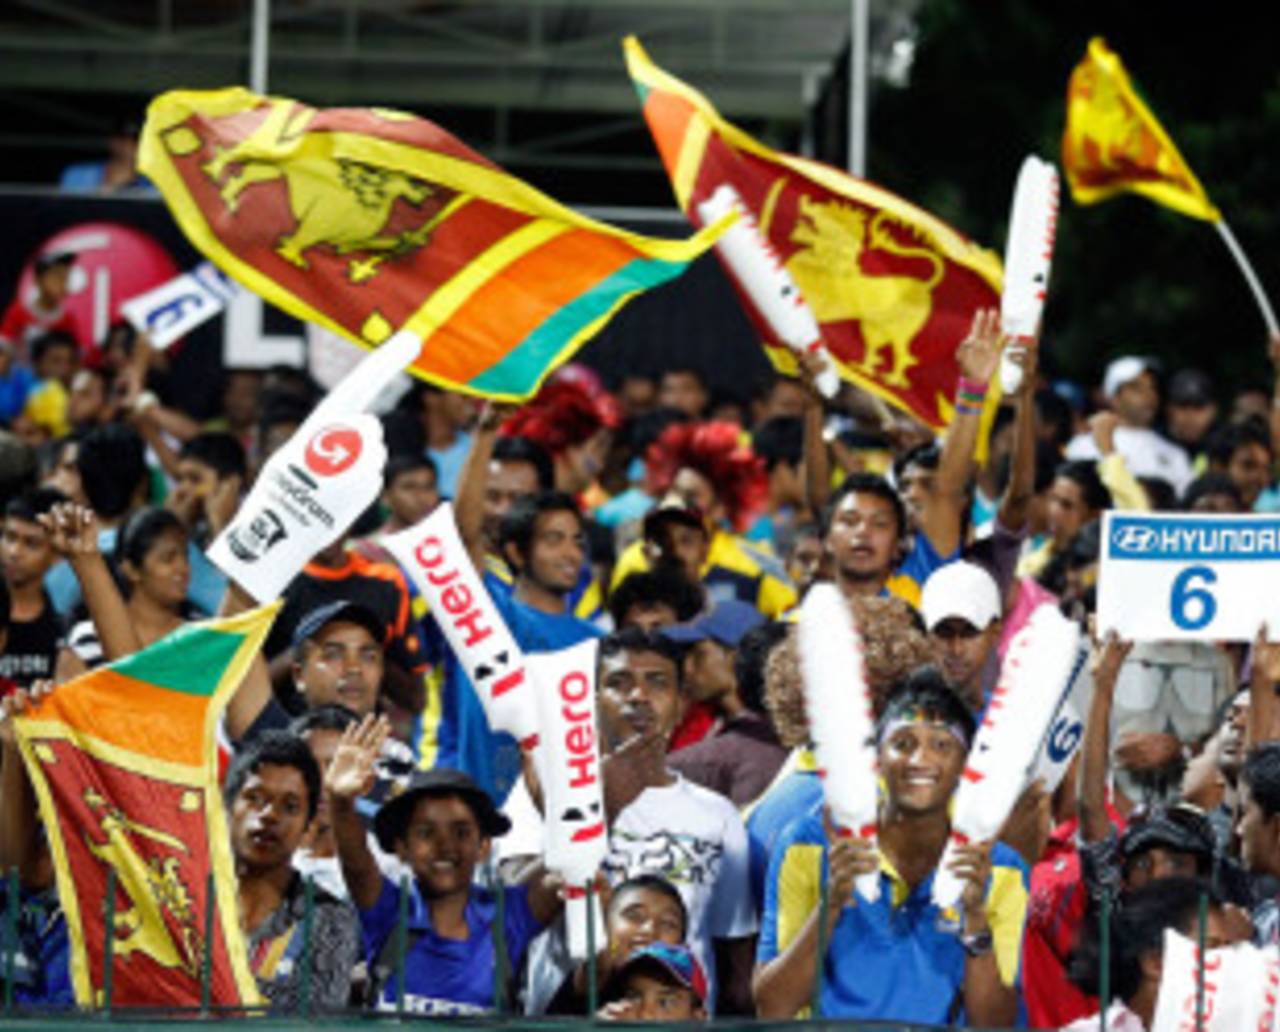 Party time for Sri Lanka fans in Kandy&nbsp;&nbsp;&bull;&nbsp;&nbsp;ICC/Getty